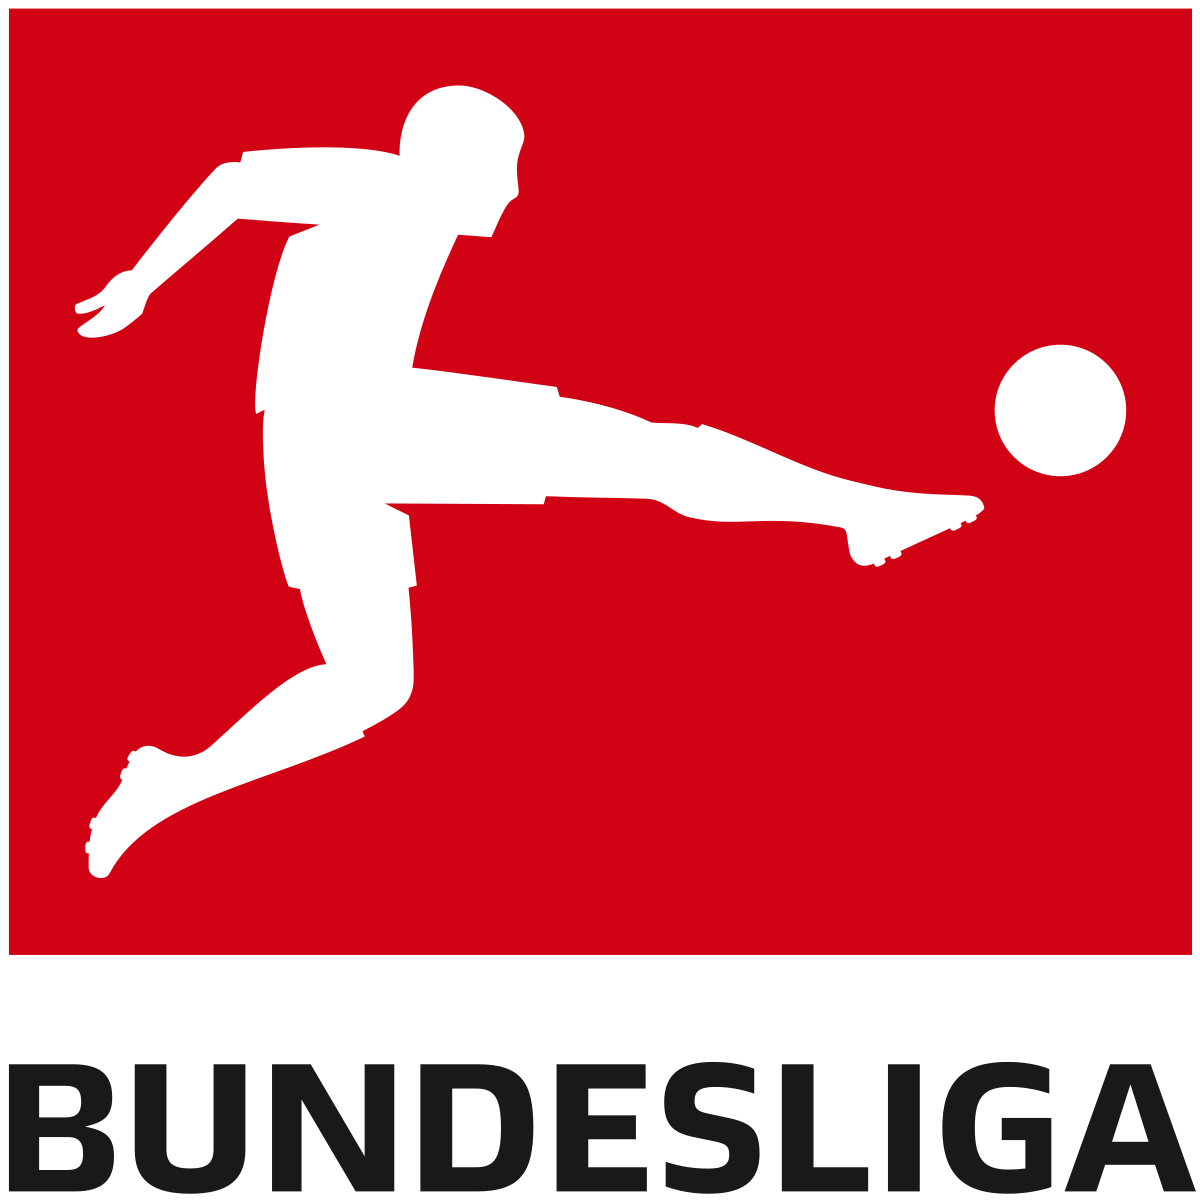 Bundesliga.png